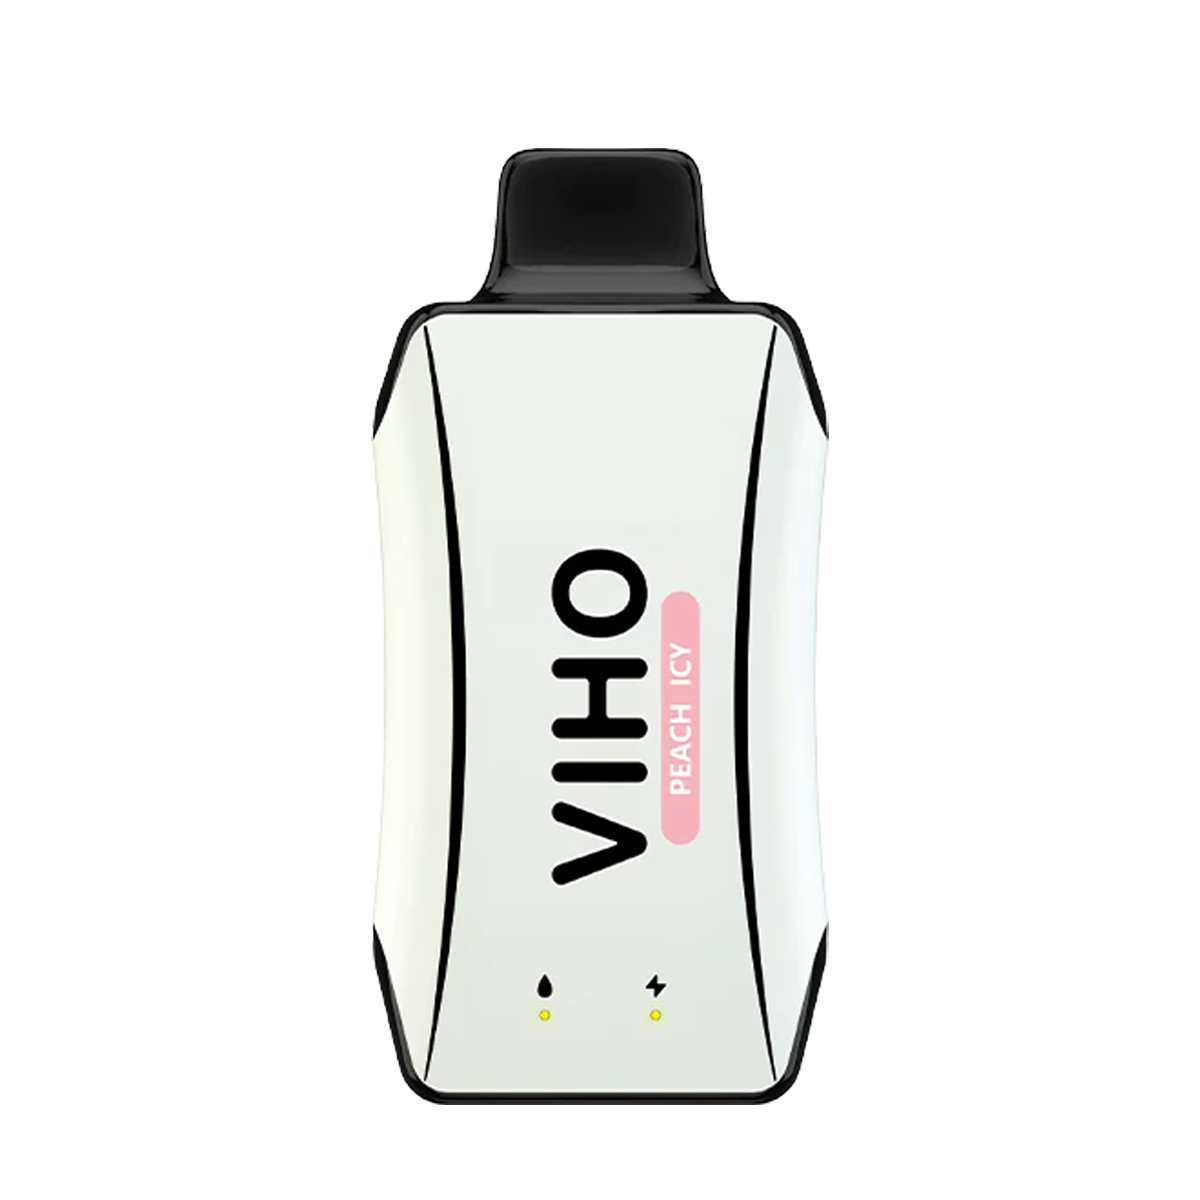 Viho Turbo 10000 Disposable Vape Peach Icy  